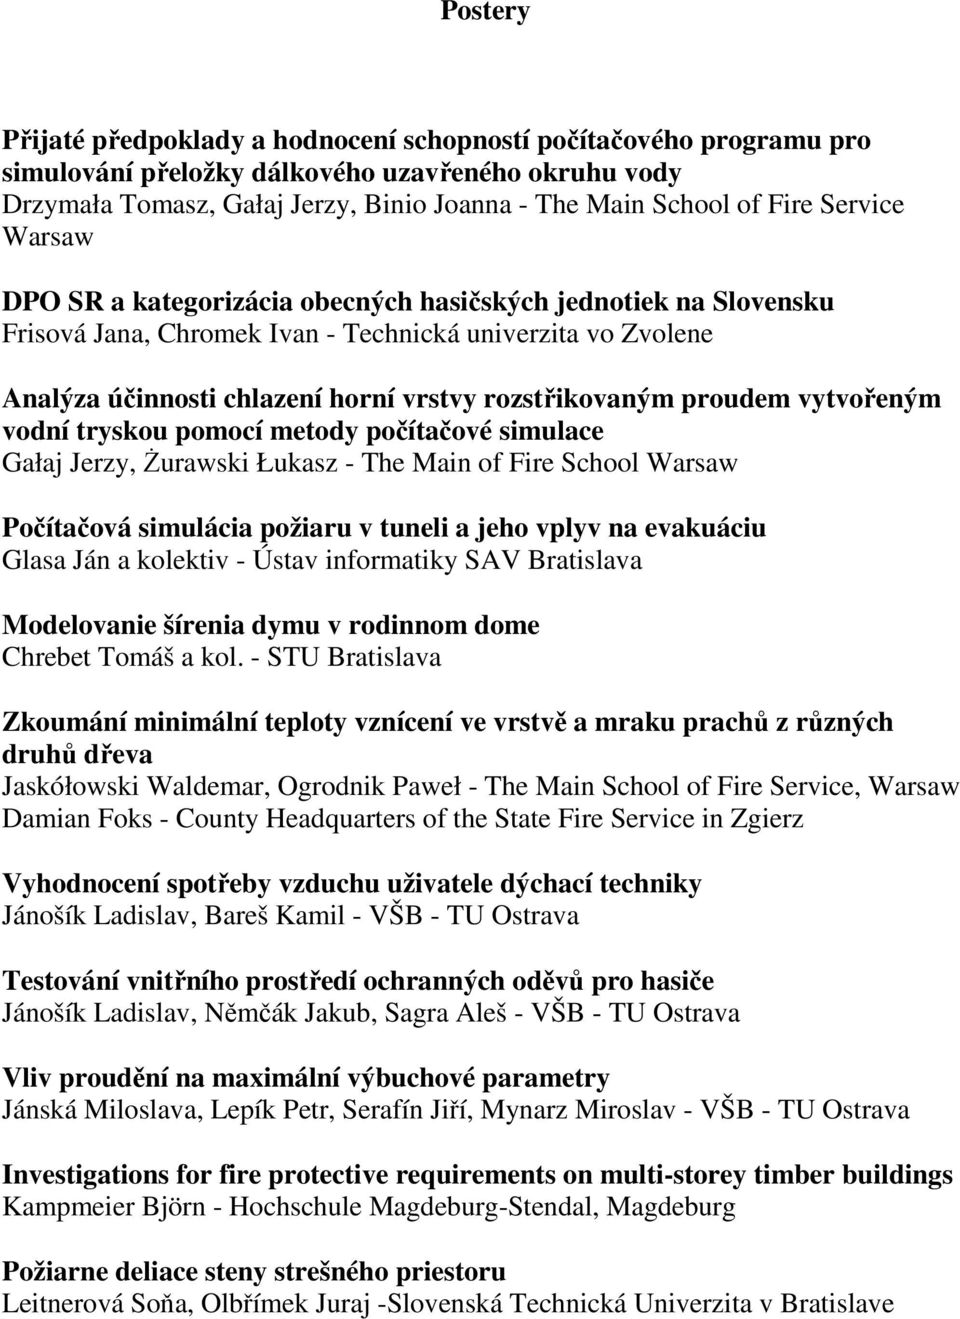 proudem vytvořeným vodní tryskou pomocí metody počítačové simulace Gałaj Jerzy, śurawski Łukasz - The Main of Fire School Warsaw Počítačová simulácia požiaru v tuneli a jeho vplyv na evakuáciu Glasa